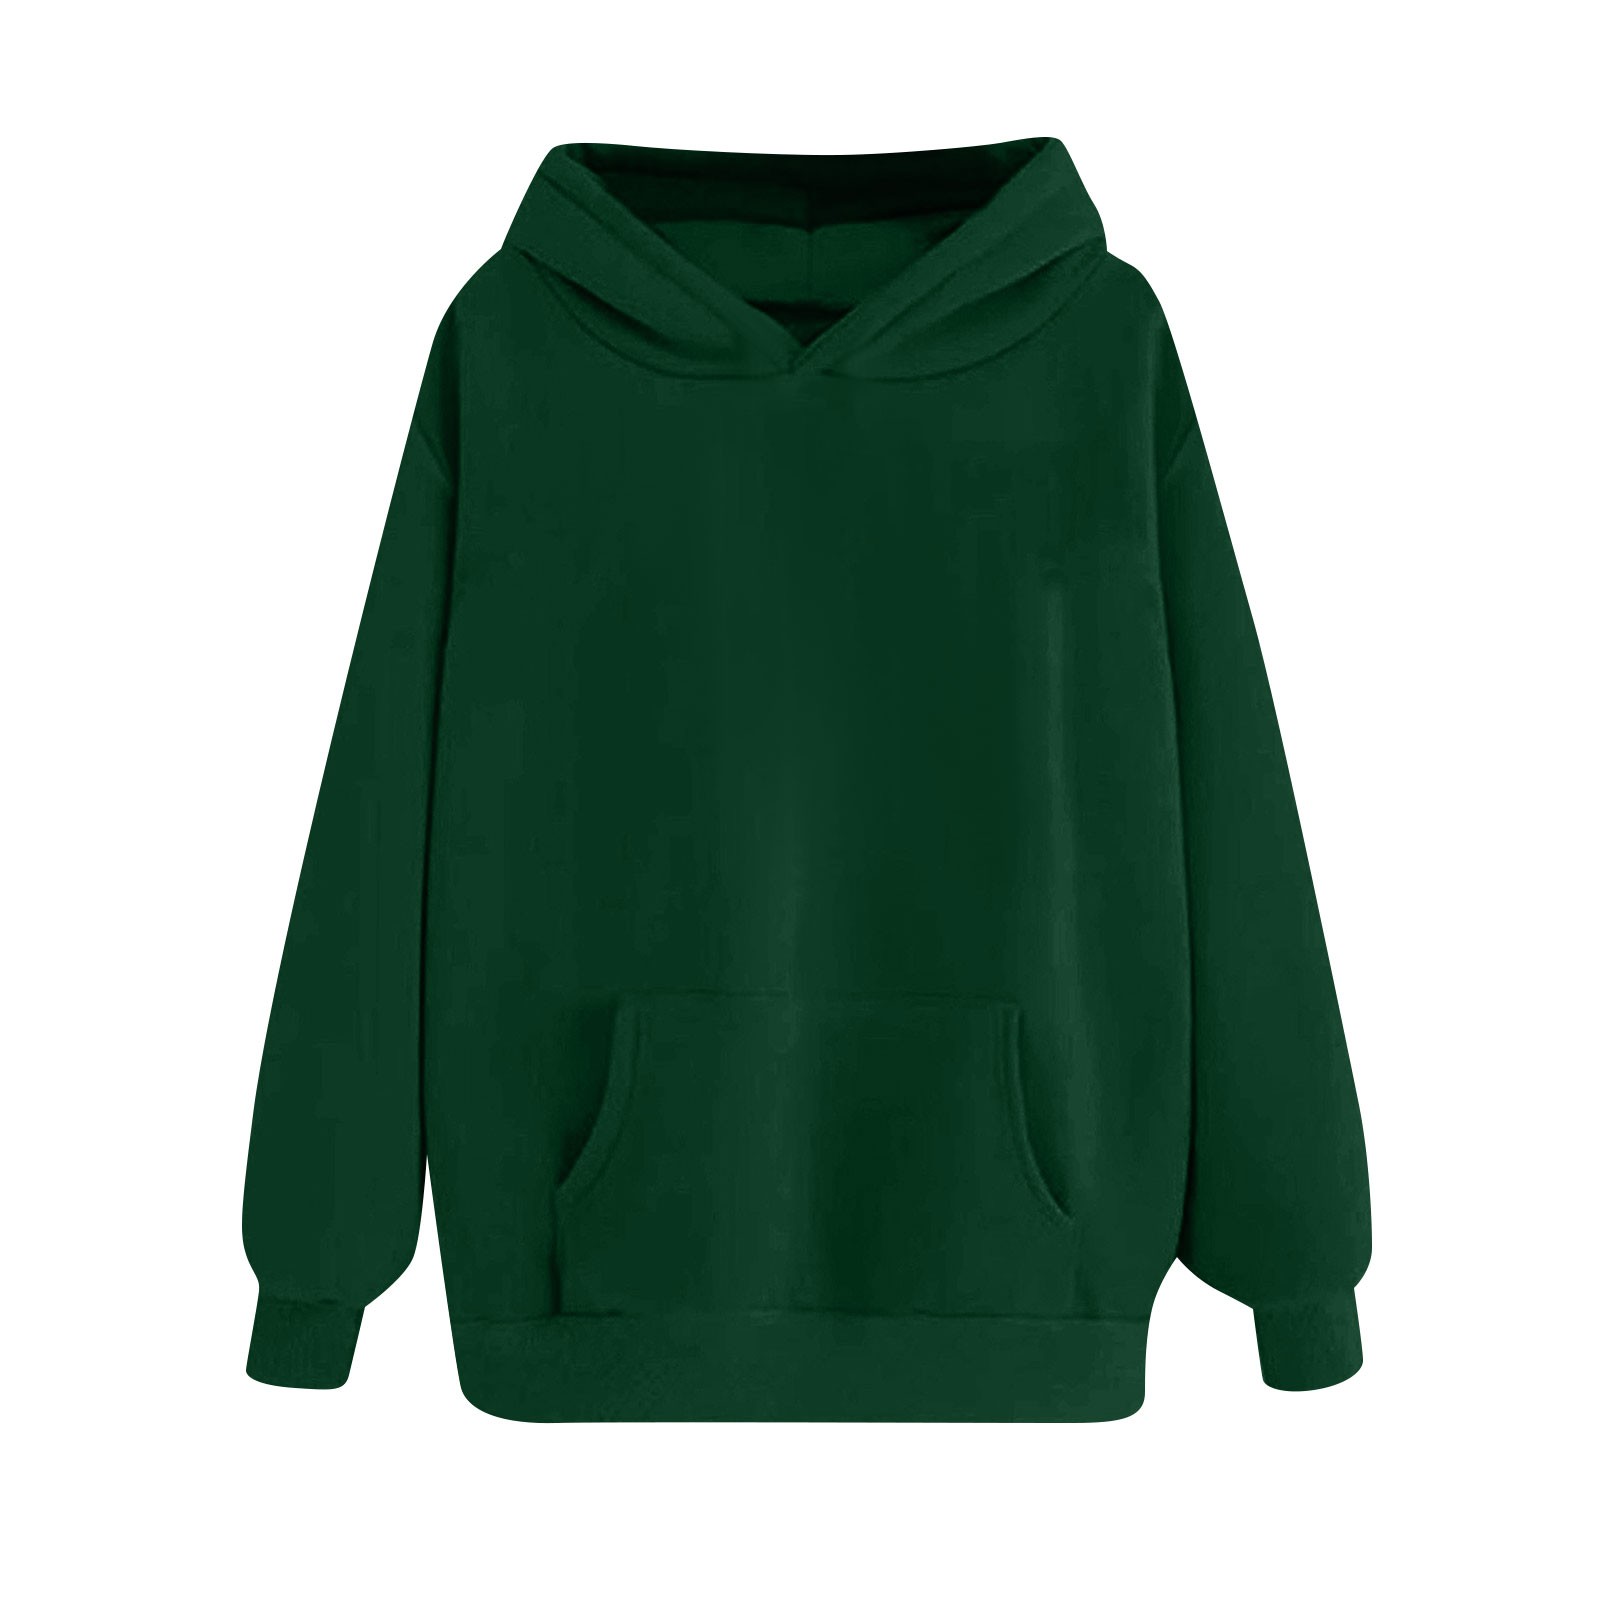 Dndkilg Tunic Sweatshirt with Pocket Dark Green Fashion Plus Size ...